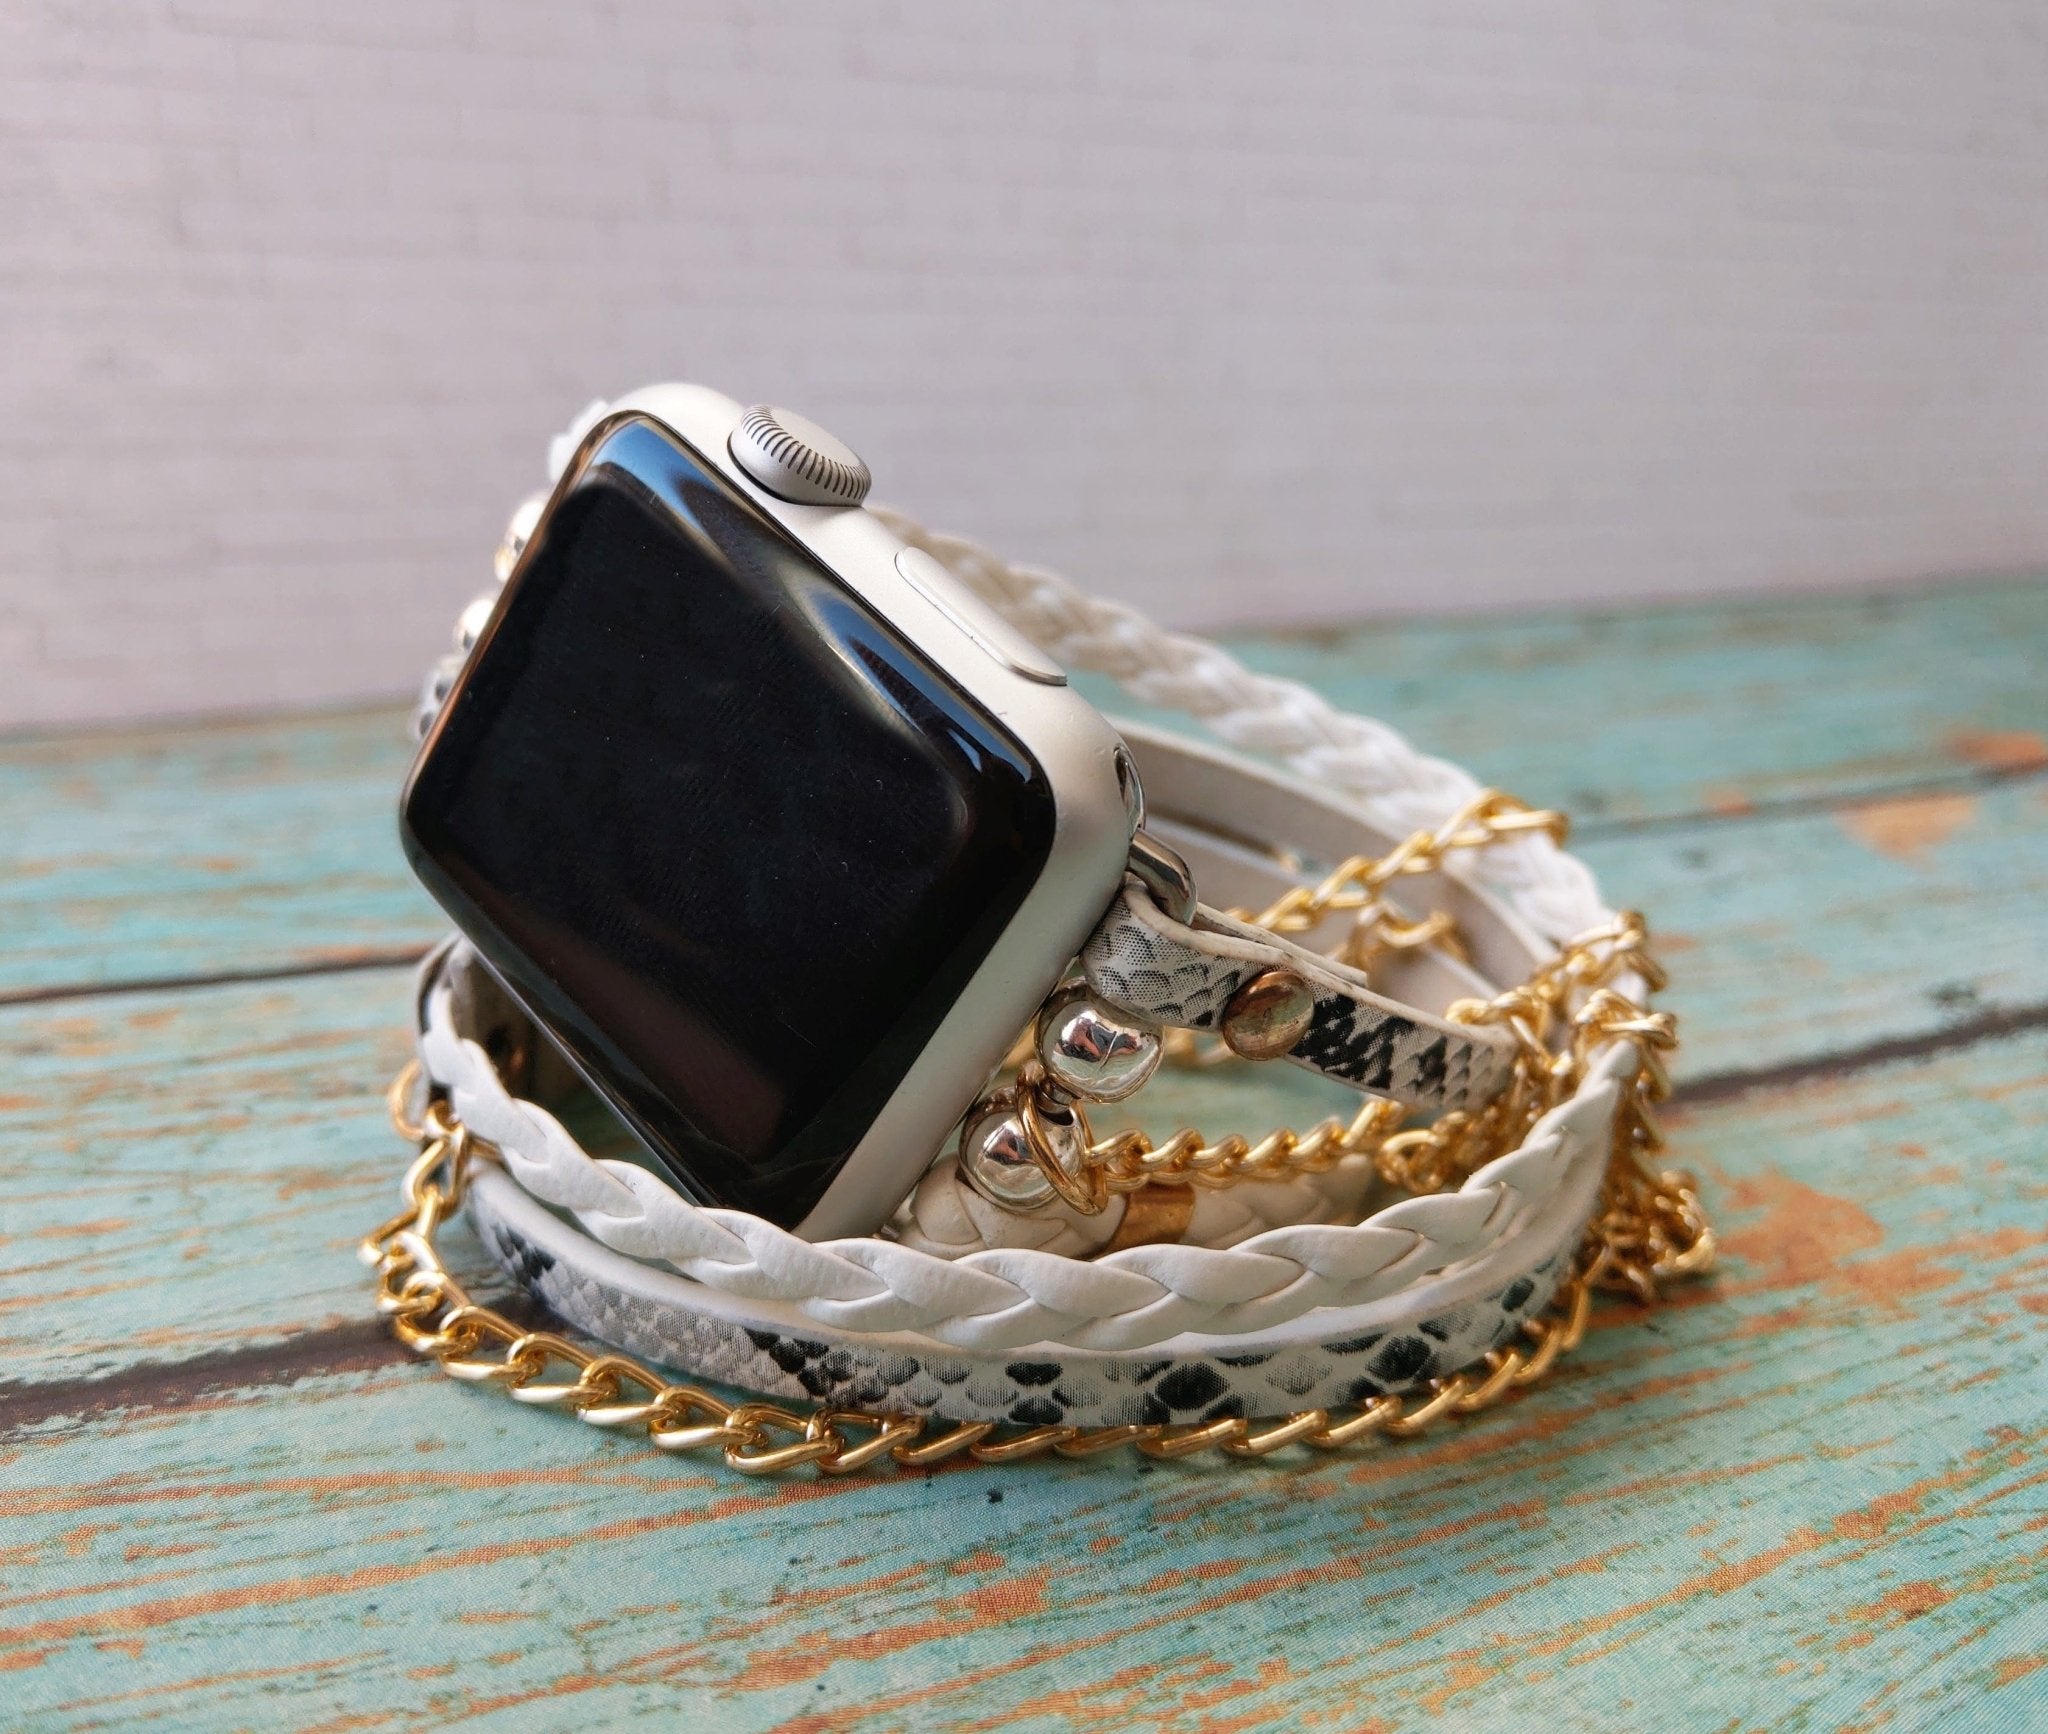 White Snakeskin Boho Chic Wrap Bracelet Watch Band with Gold Chain - Mareevo